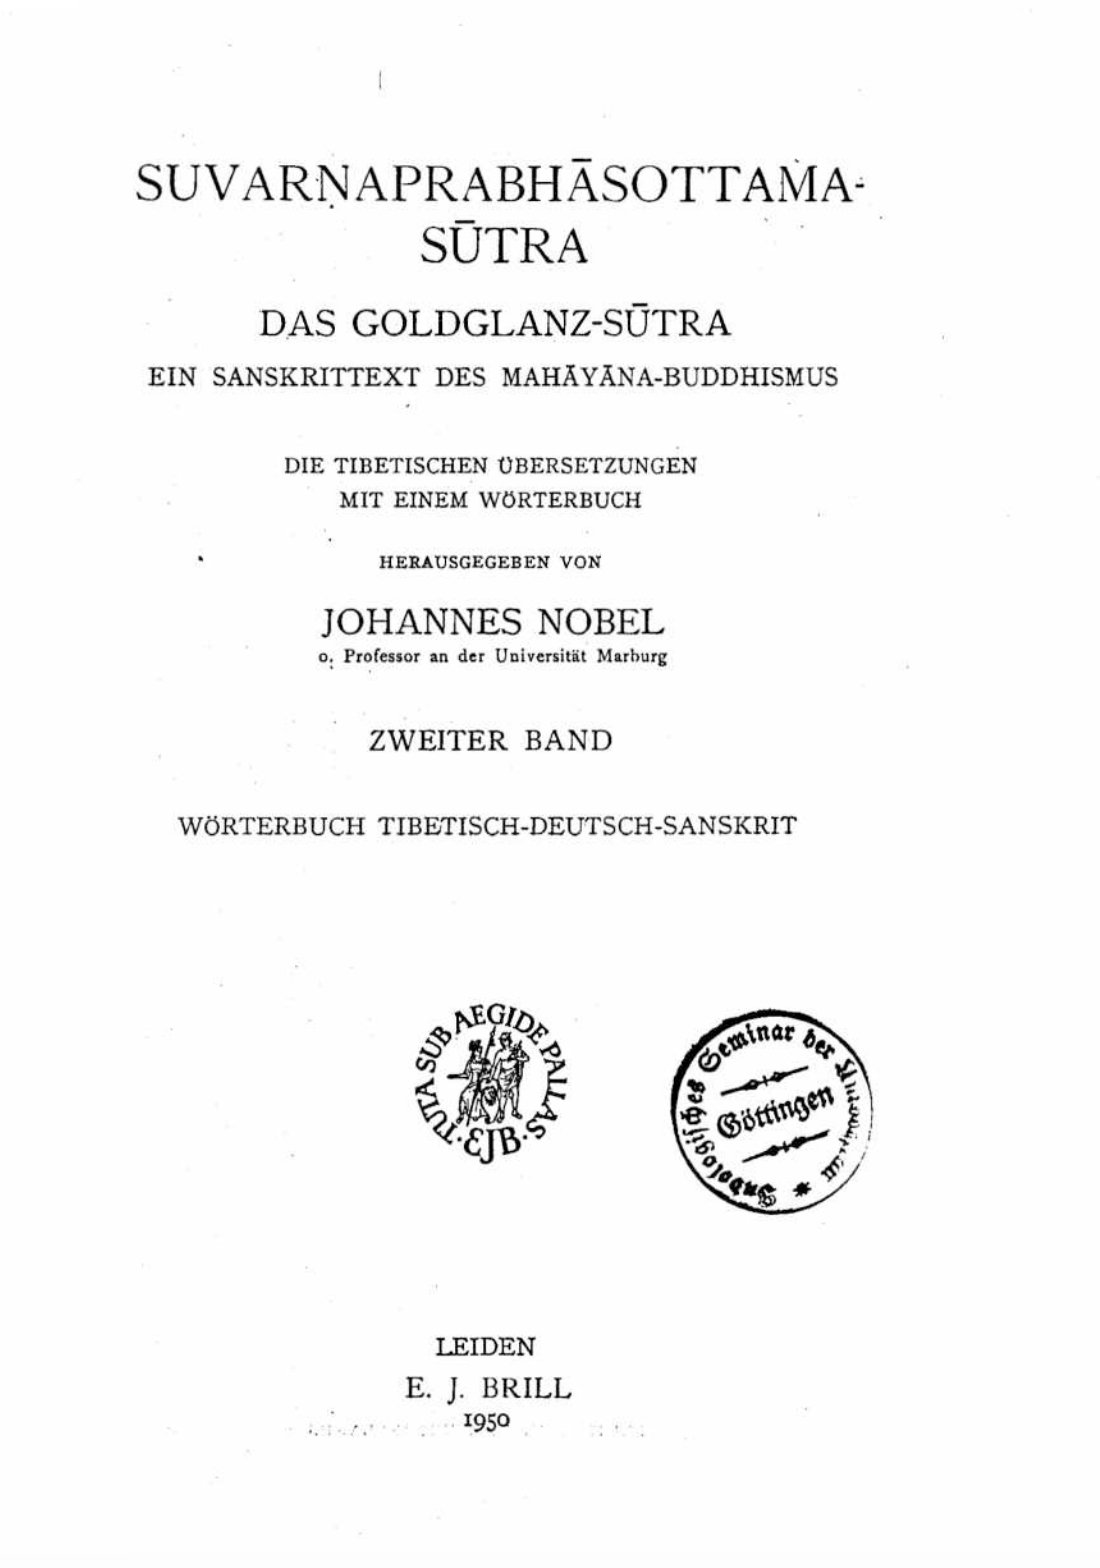 Suvarṇaprabhāsottama-Sūtra Das Goldglanz-Sūtra Vol 2 Nobel 1950-front.jpg